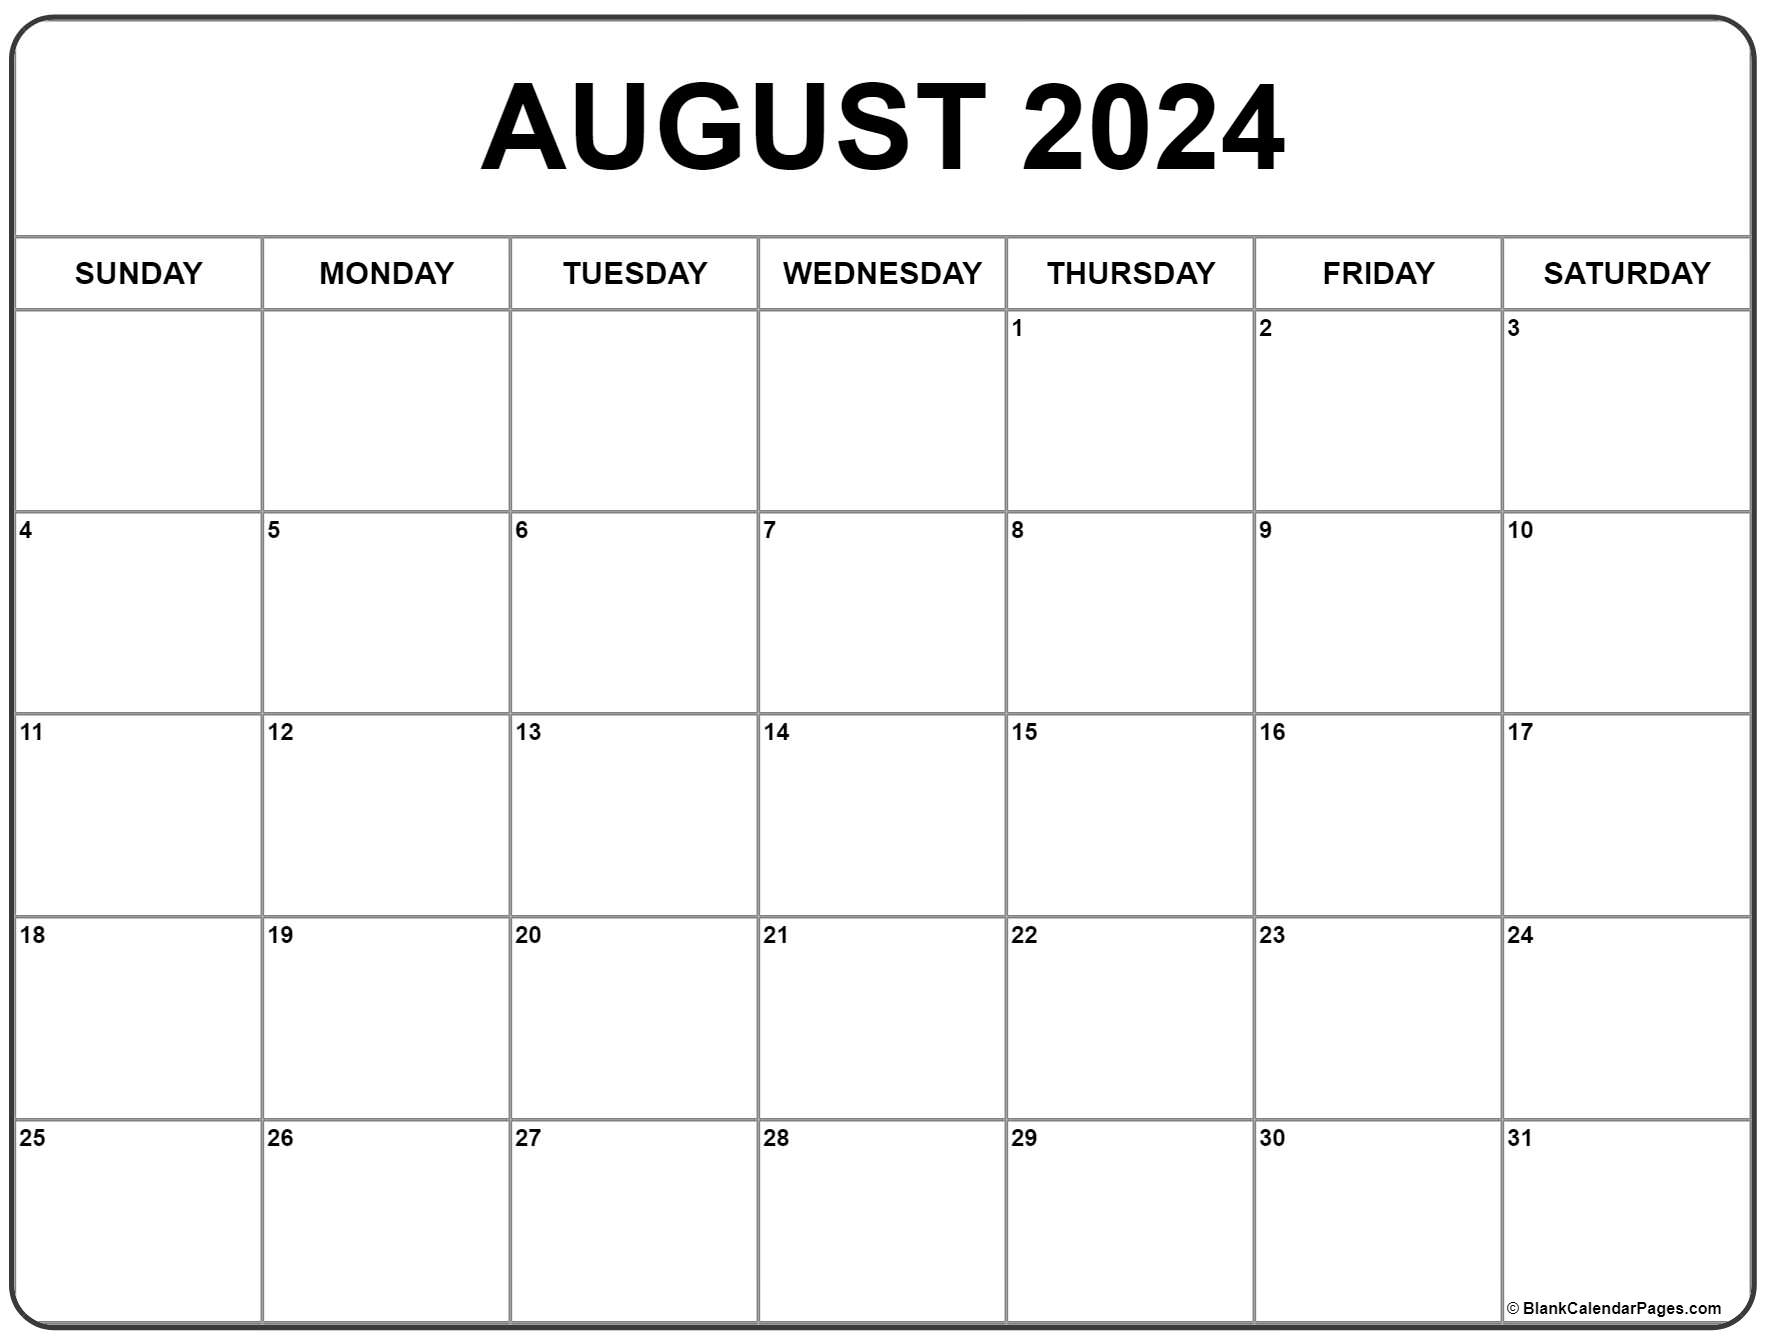 August 2024 Calendar | Free Printable Calendar intended for Free Printable Calendar 2024 August